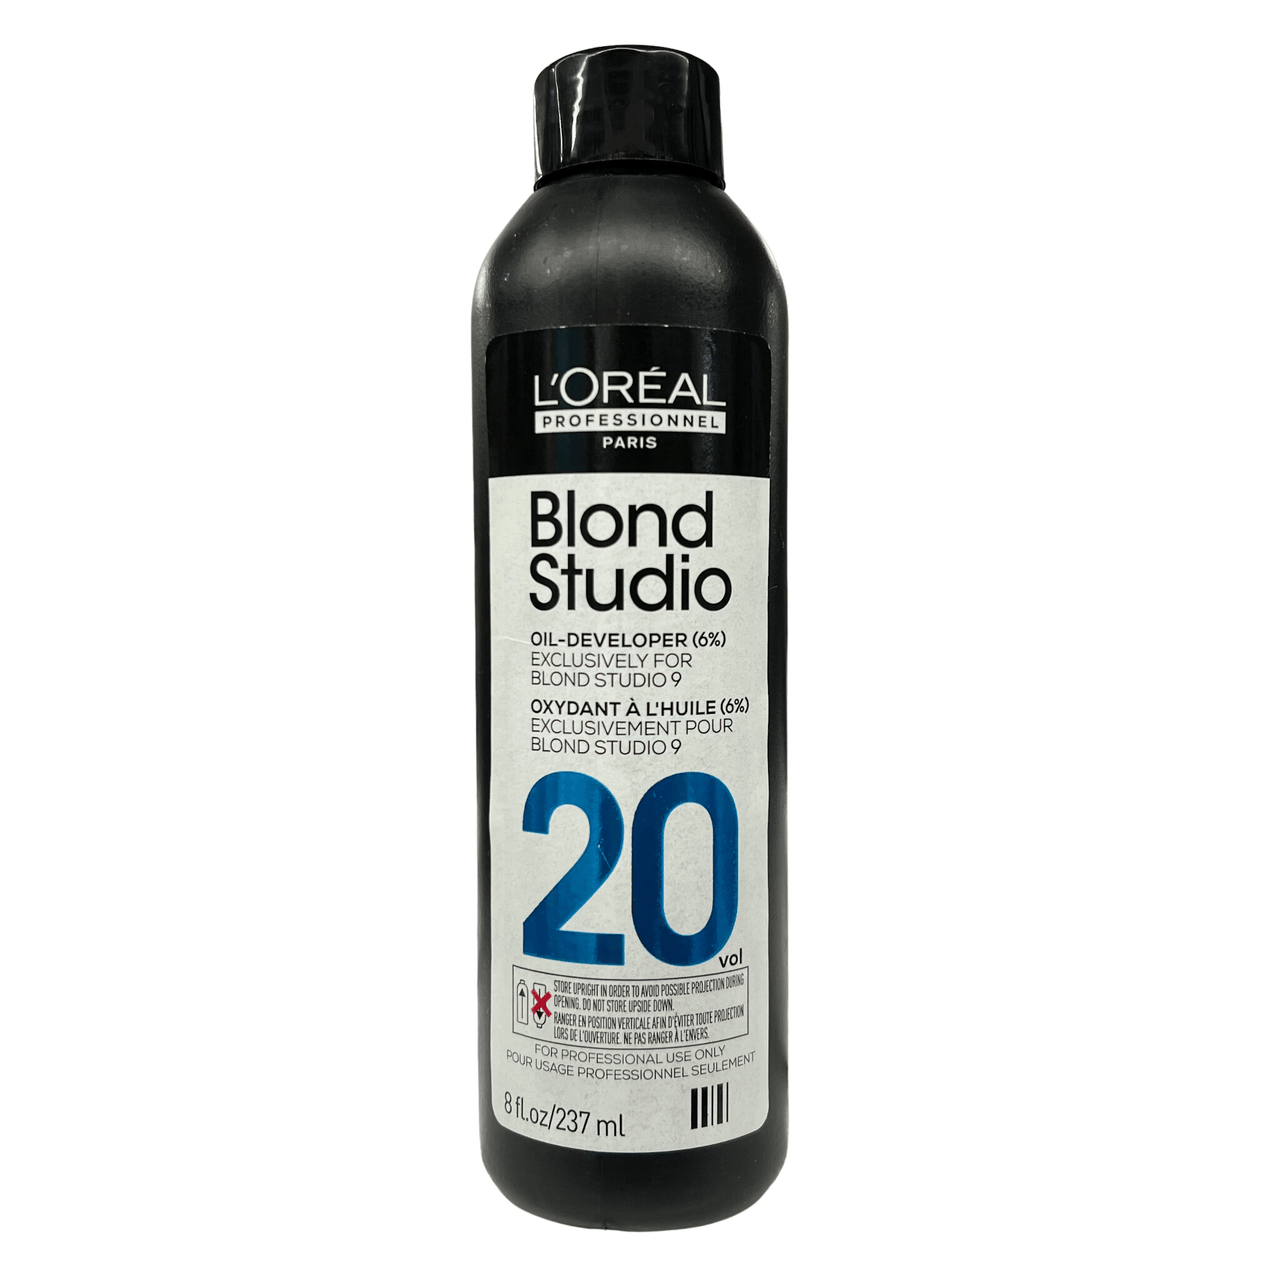 L'OREAL - BLOND STUDIO_Blond Studio 6% / 20 Vol Oil Developer_Cosmetic World